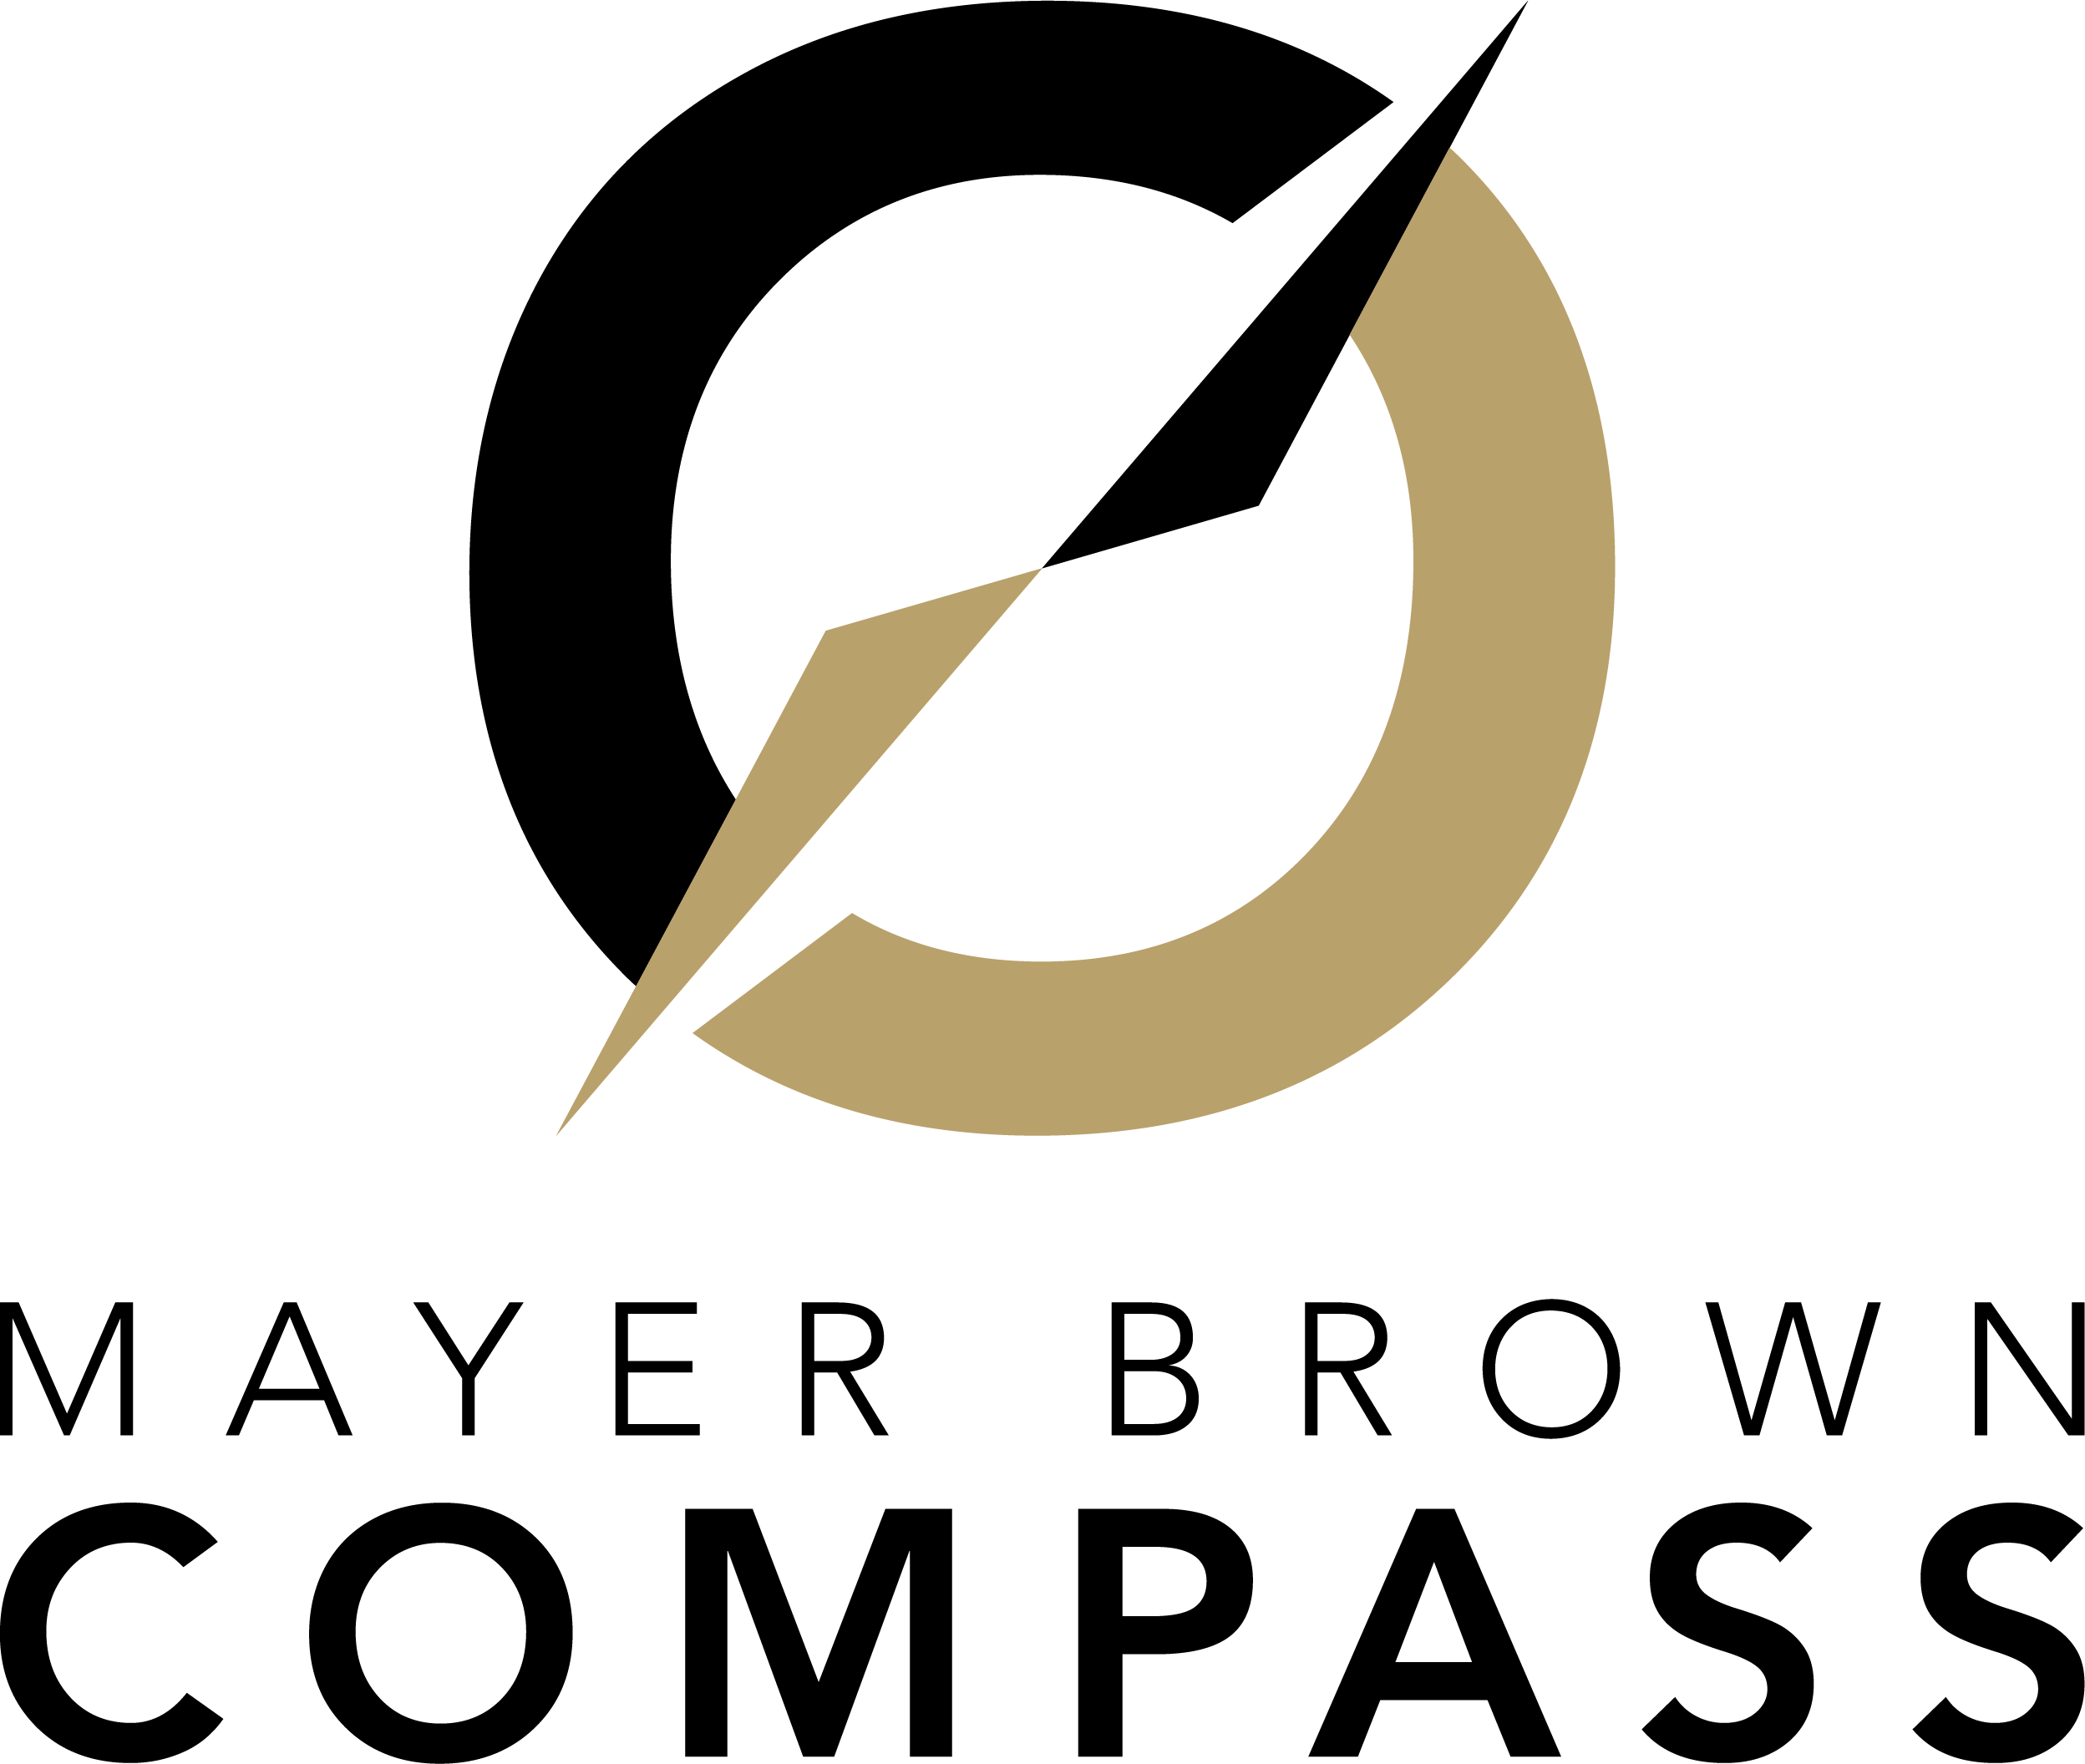 Mayer Brown Compass Logo